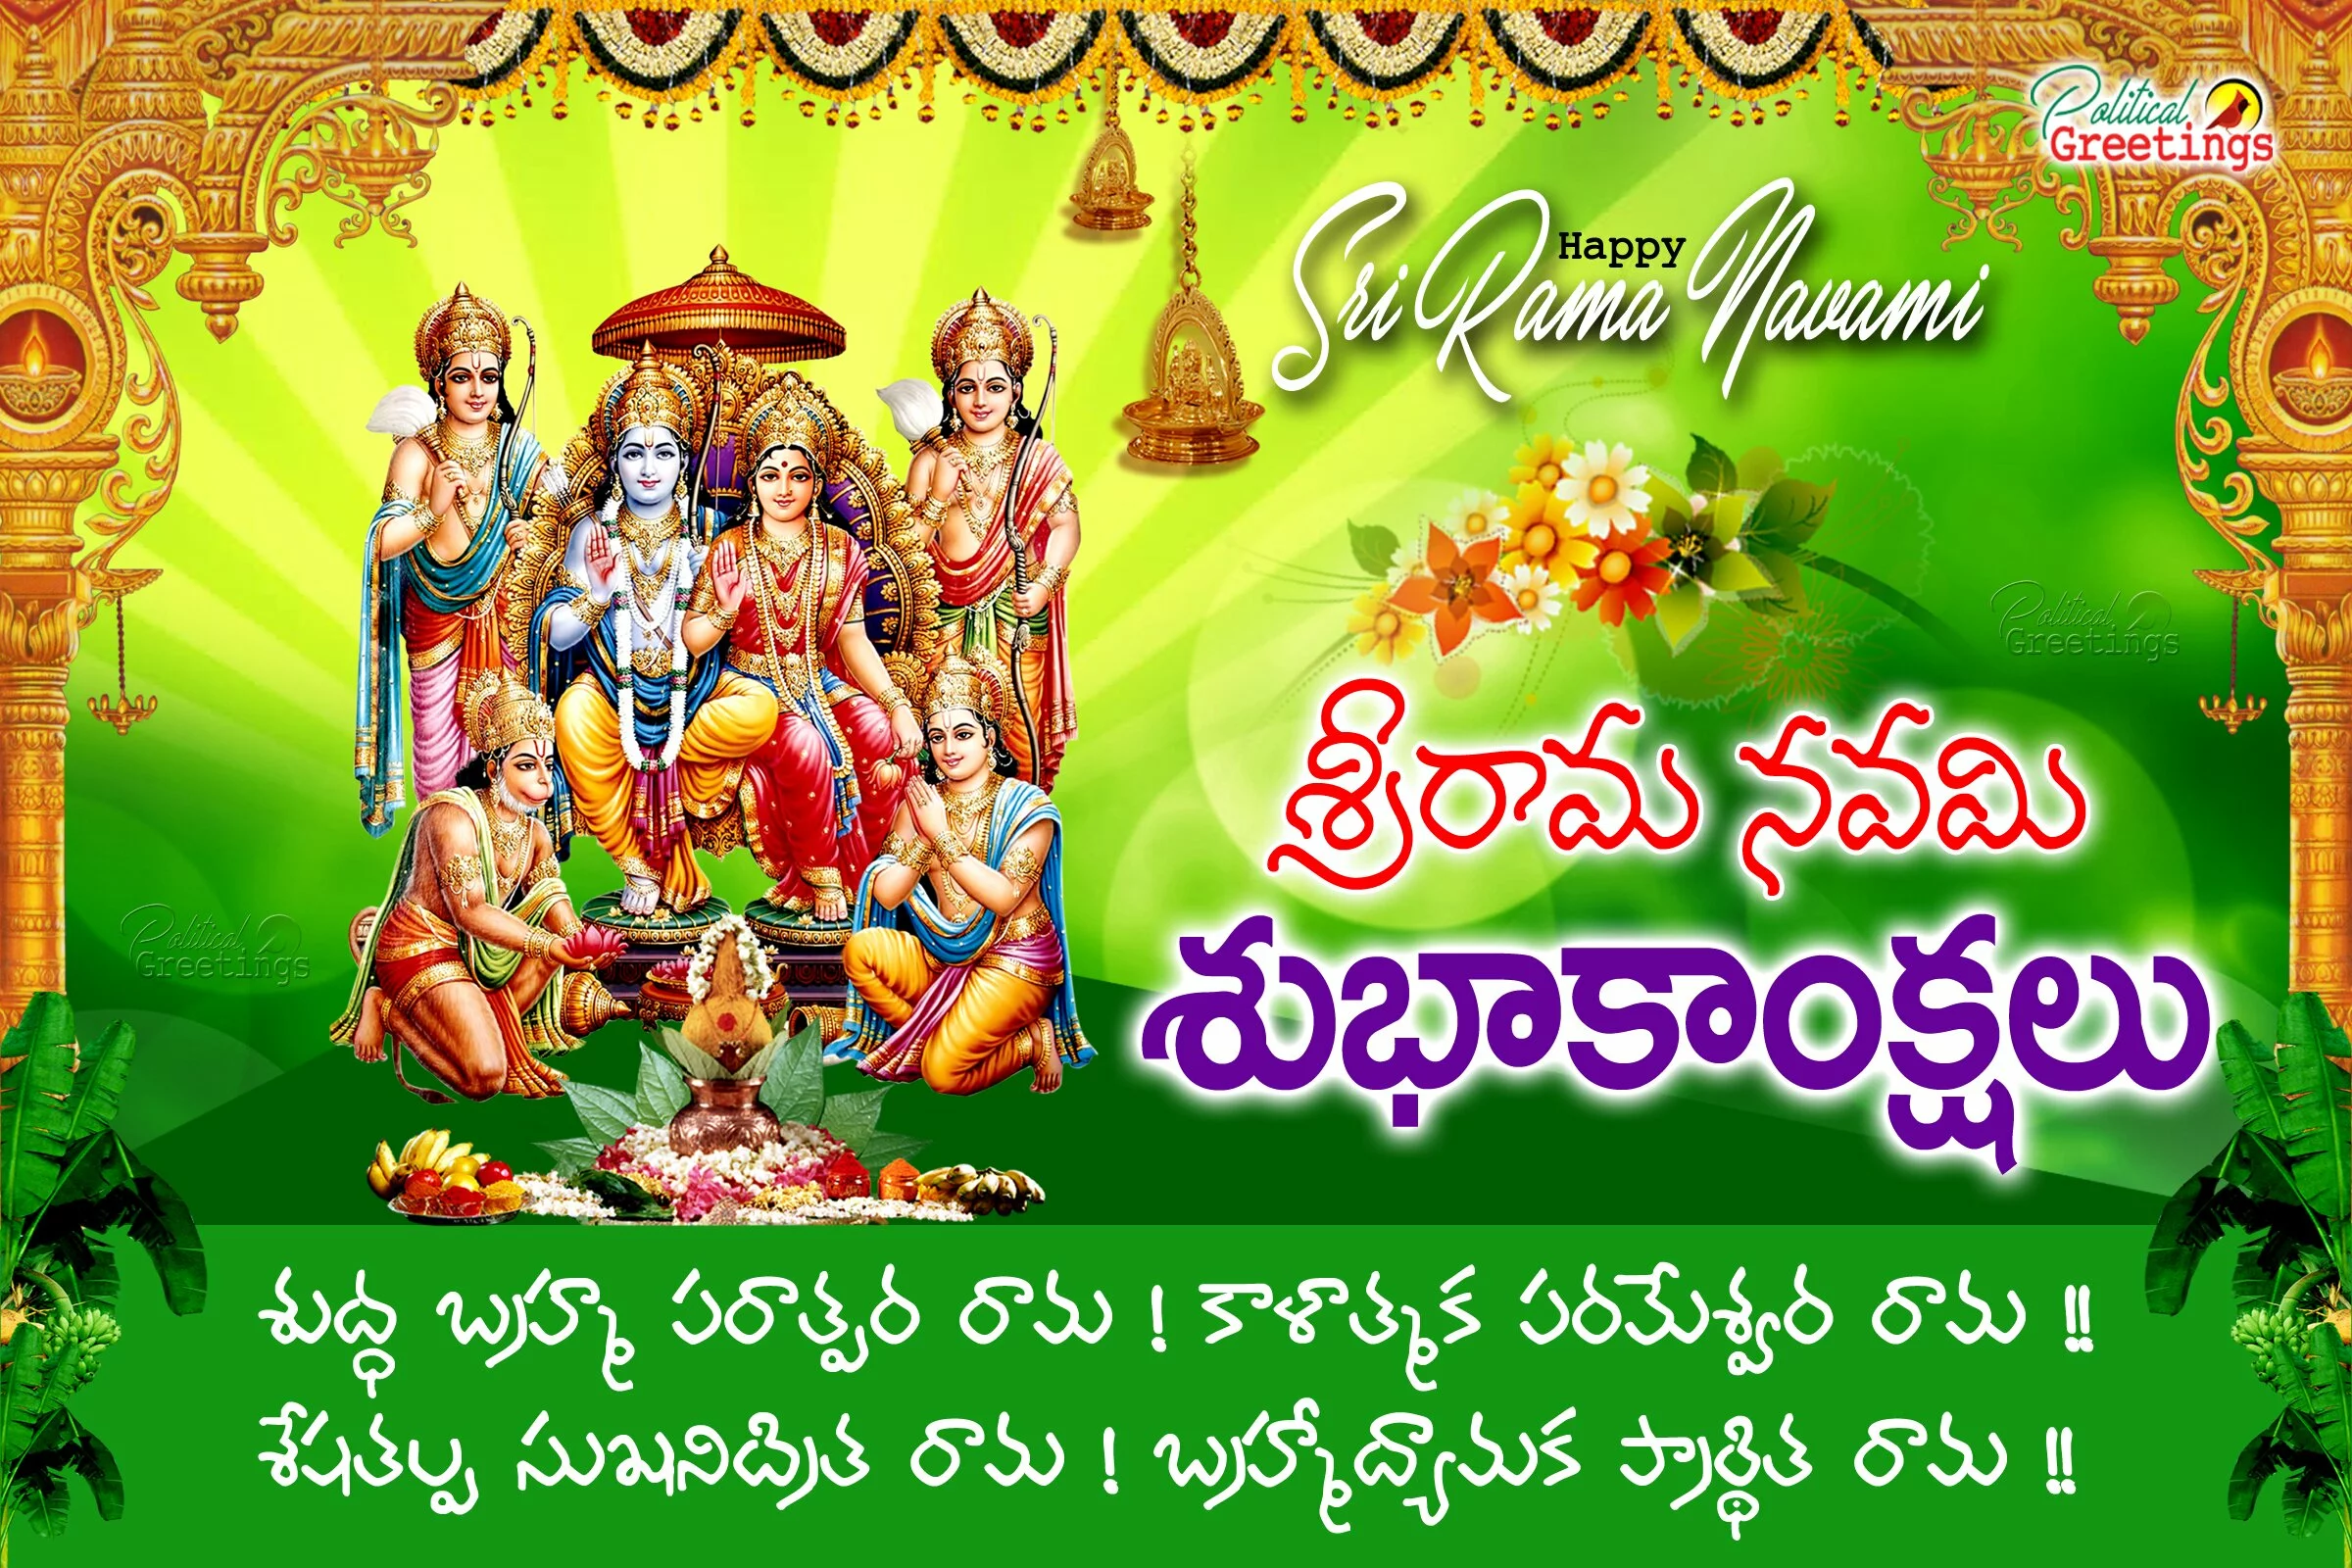 Trending Happy Sriramanavami Wishes Greetings in Telugu-Happy Sri Ramanavami Images